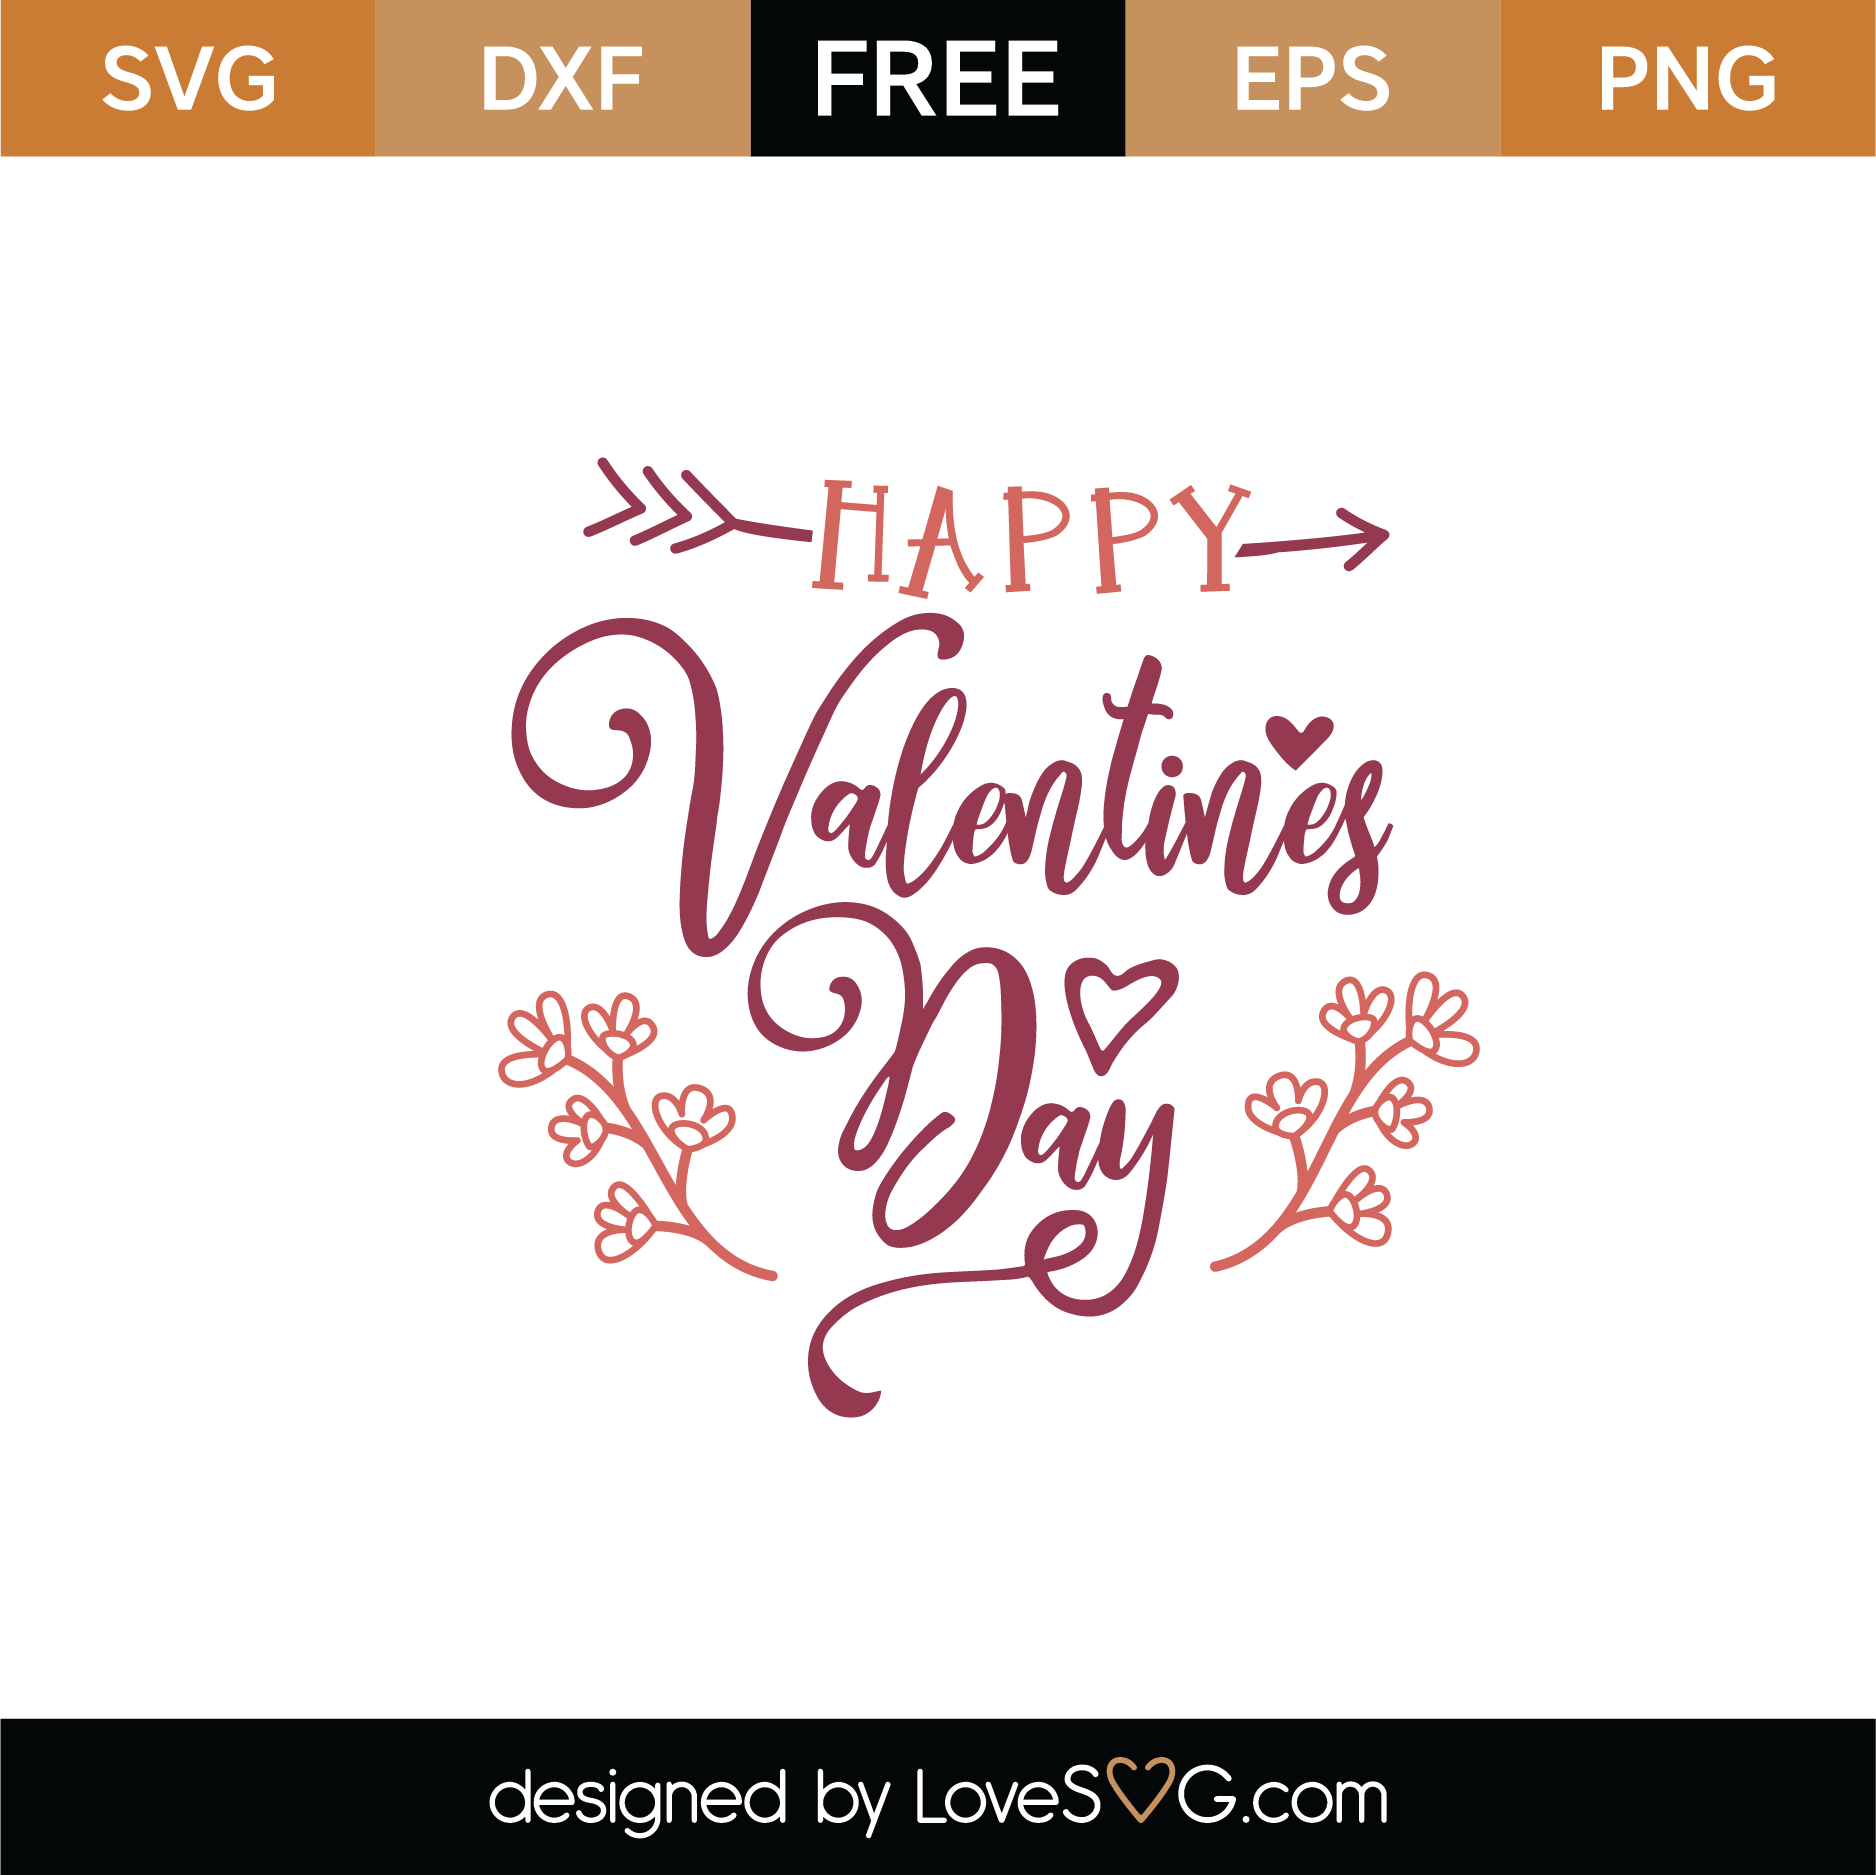 Free Happy Valentine's Day SVG Cut File | Lovesvg.com